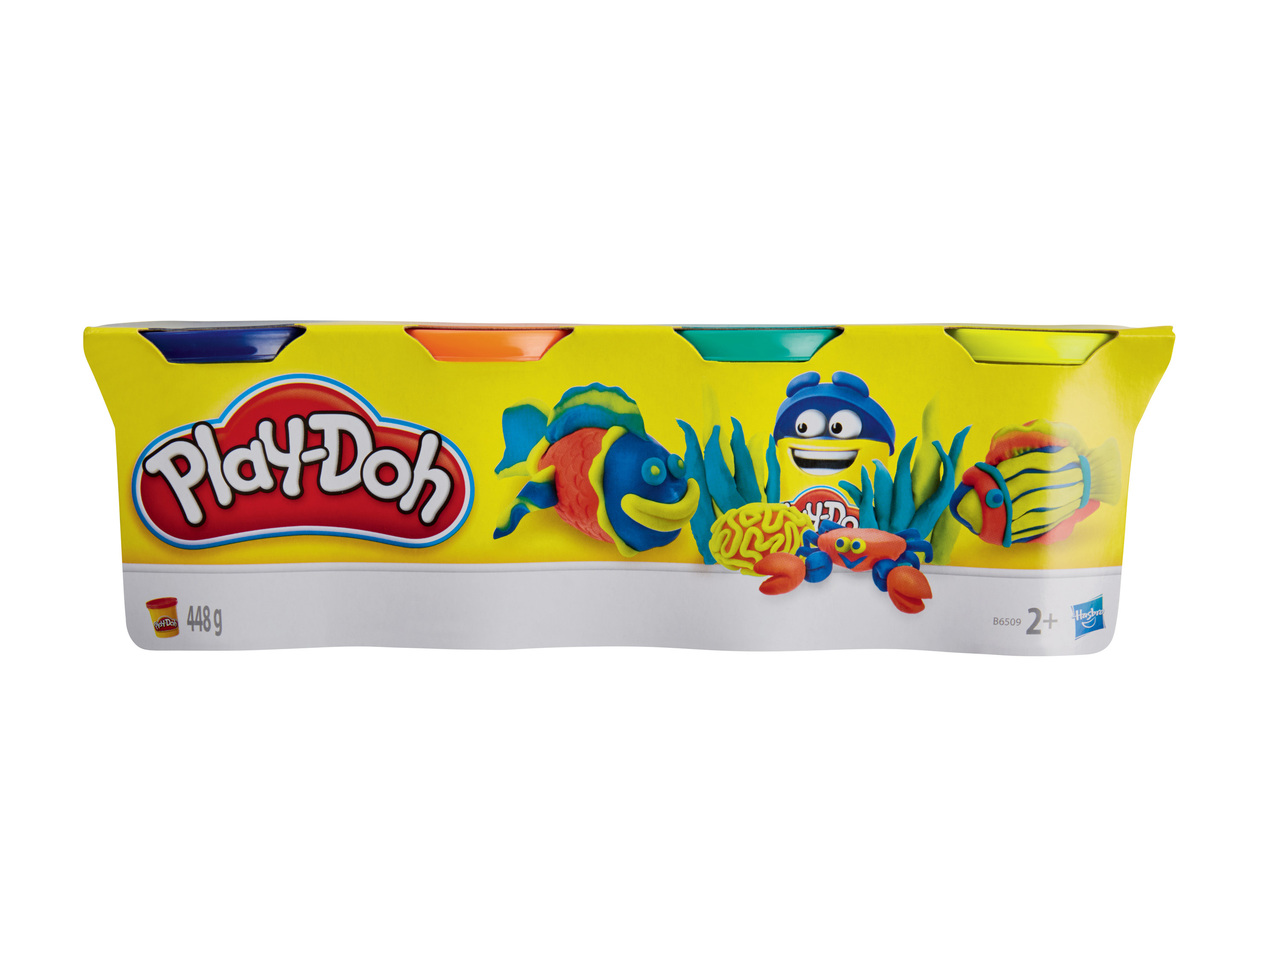 PLAY-DOH Play-Doh Tubs